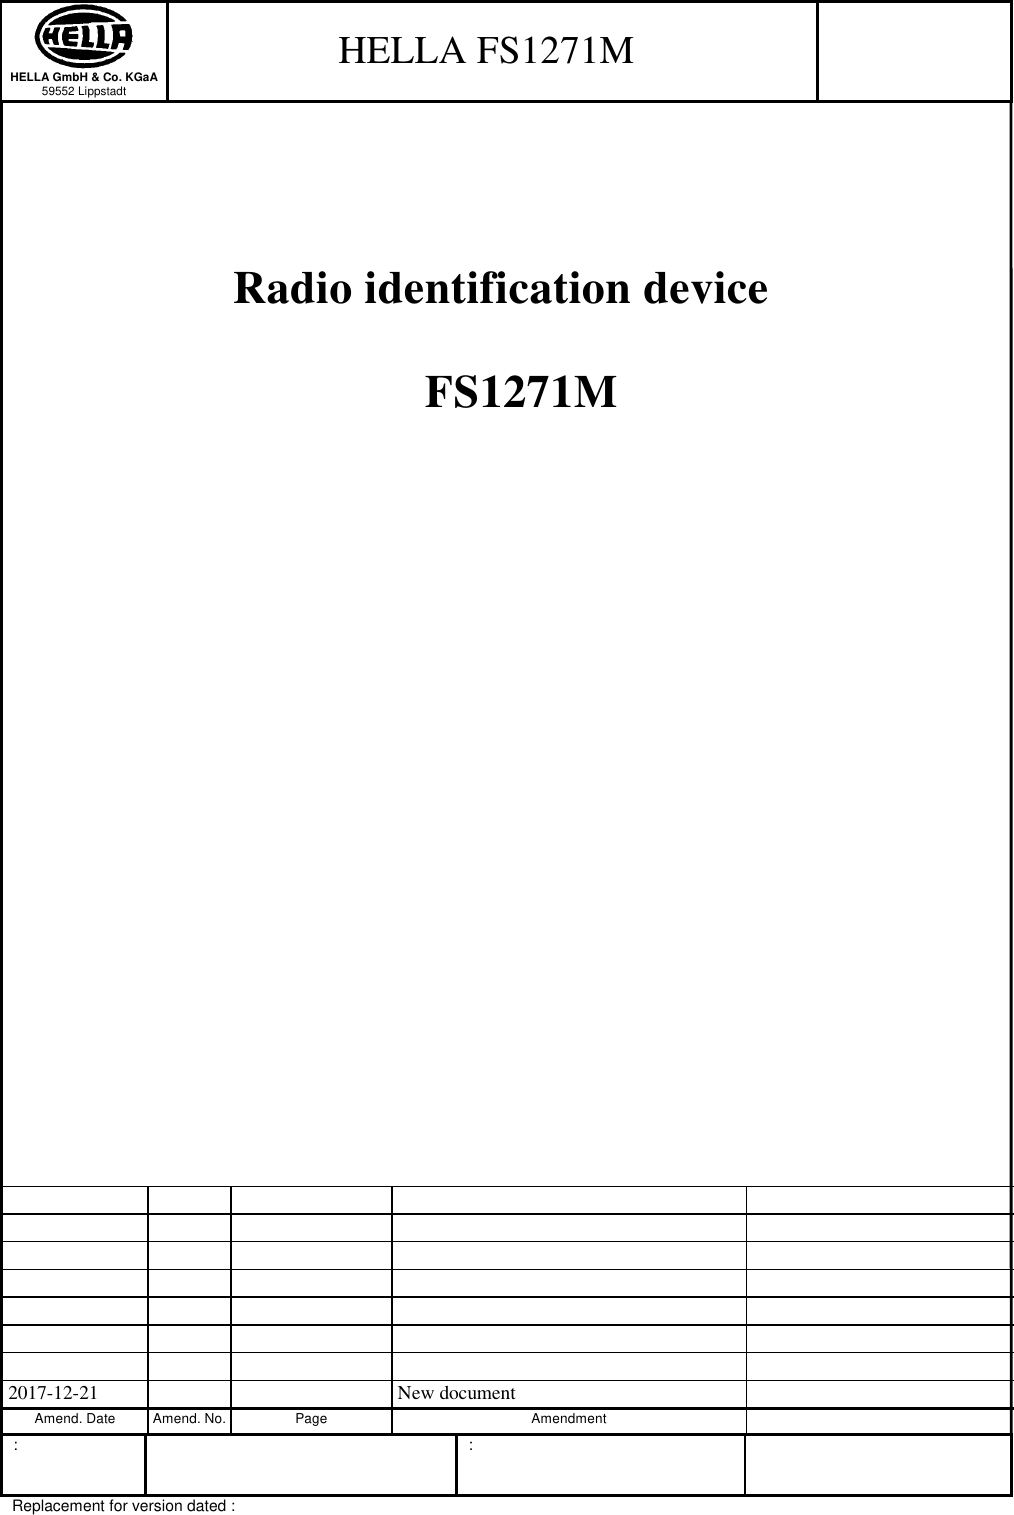  HELLA GmbH &amp; Co. KGaA 59552 Lippstadt      :      : Replacement for version dated :     Radio identification device                                                                      2017-12-21       New document   Amend. Date Amend. No. Page Amendment   FS1271M  HELLA FS1271M 